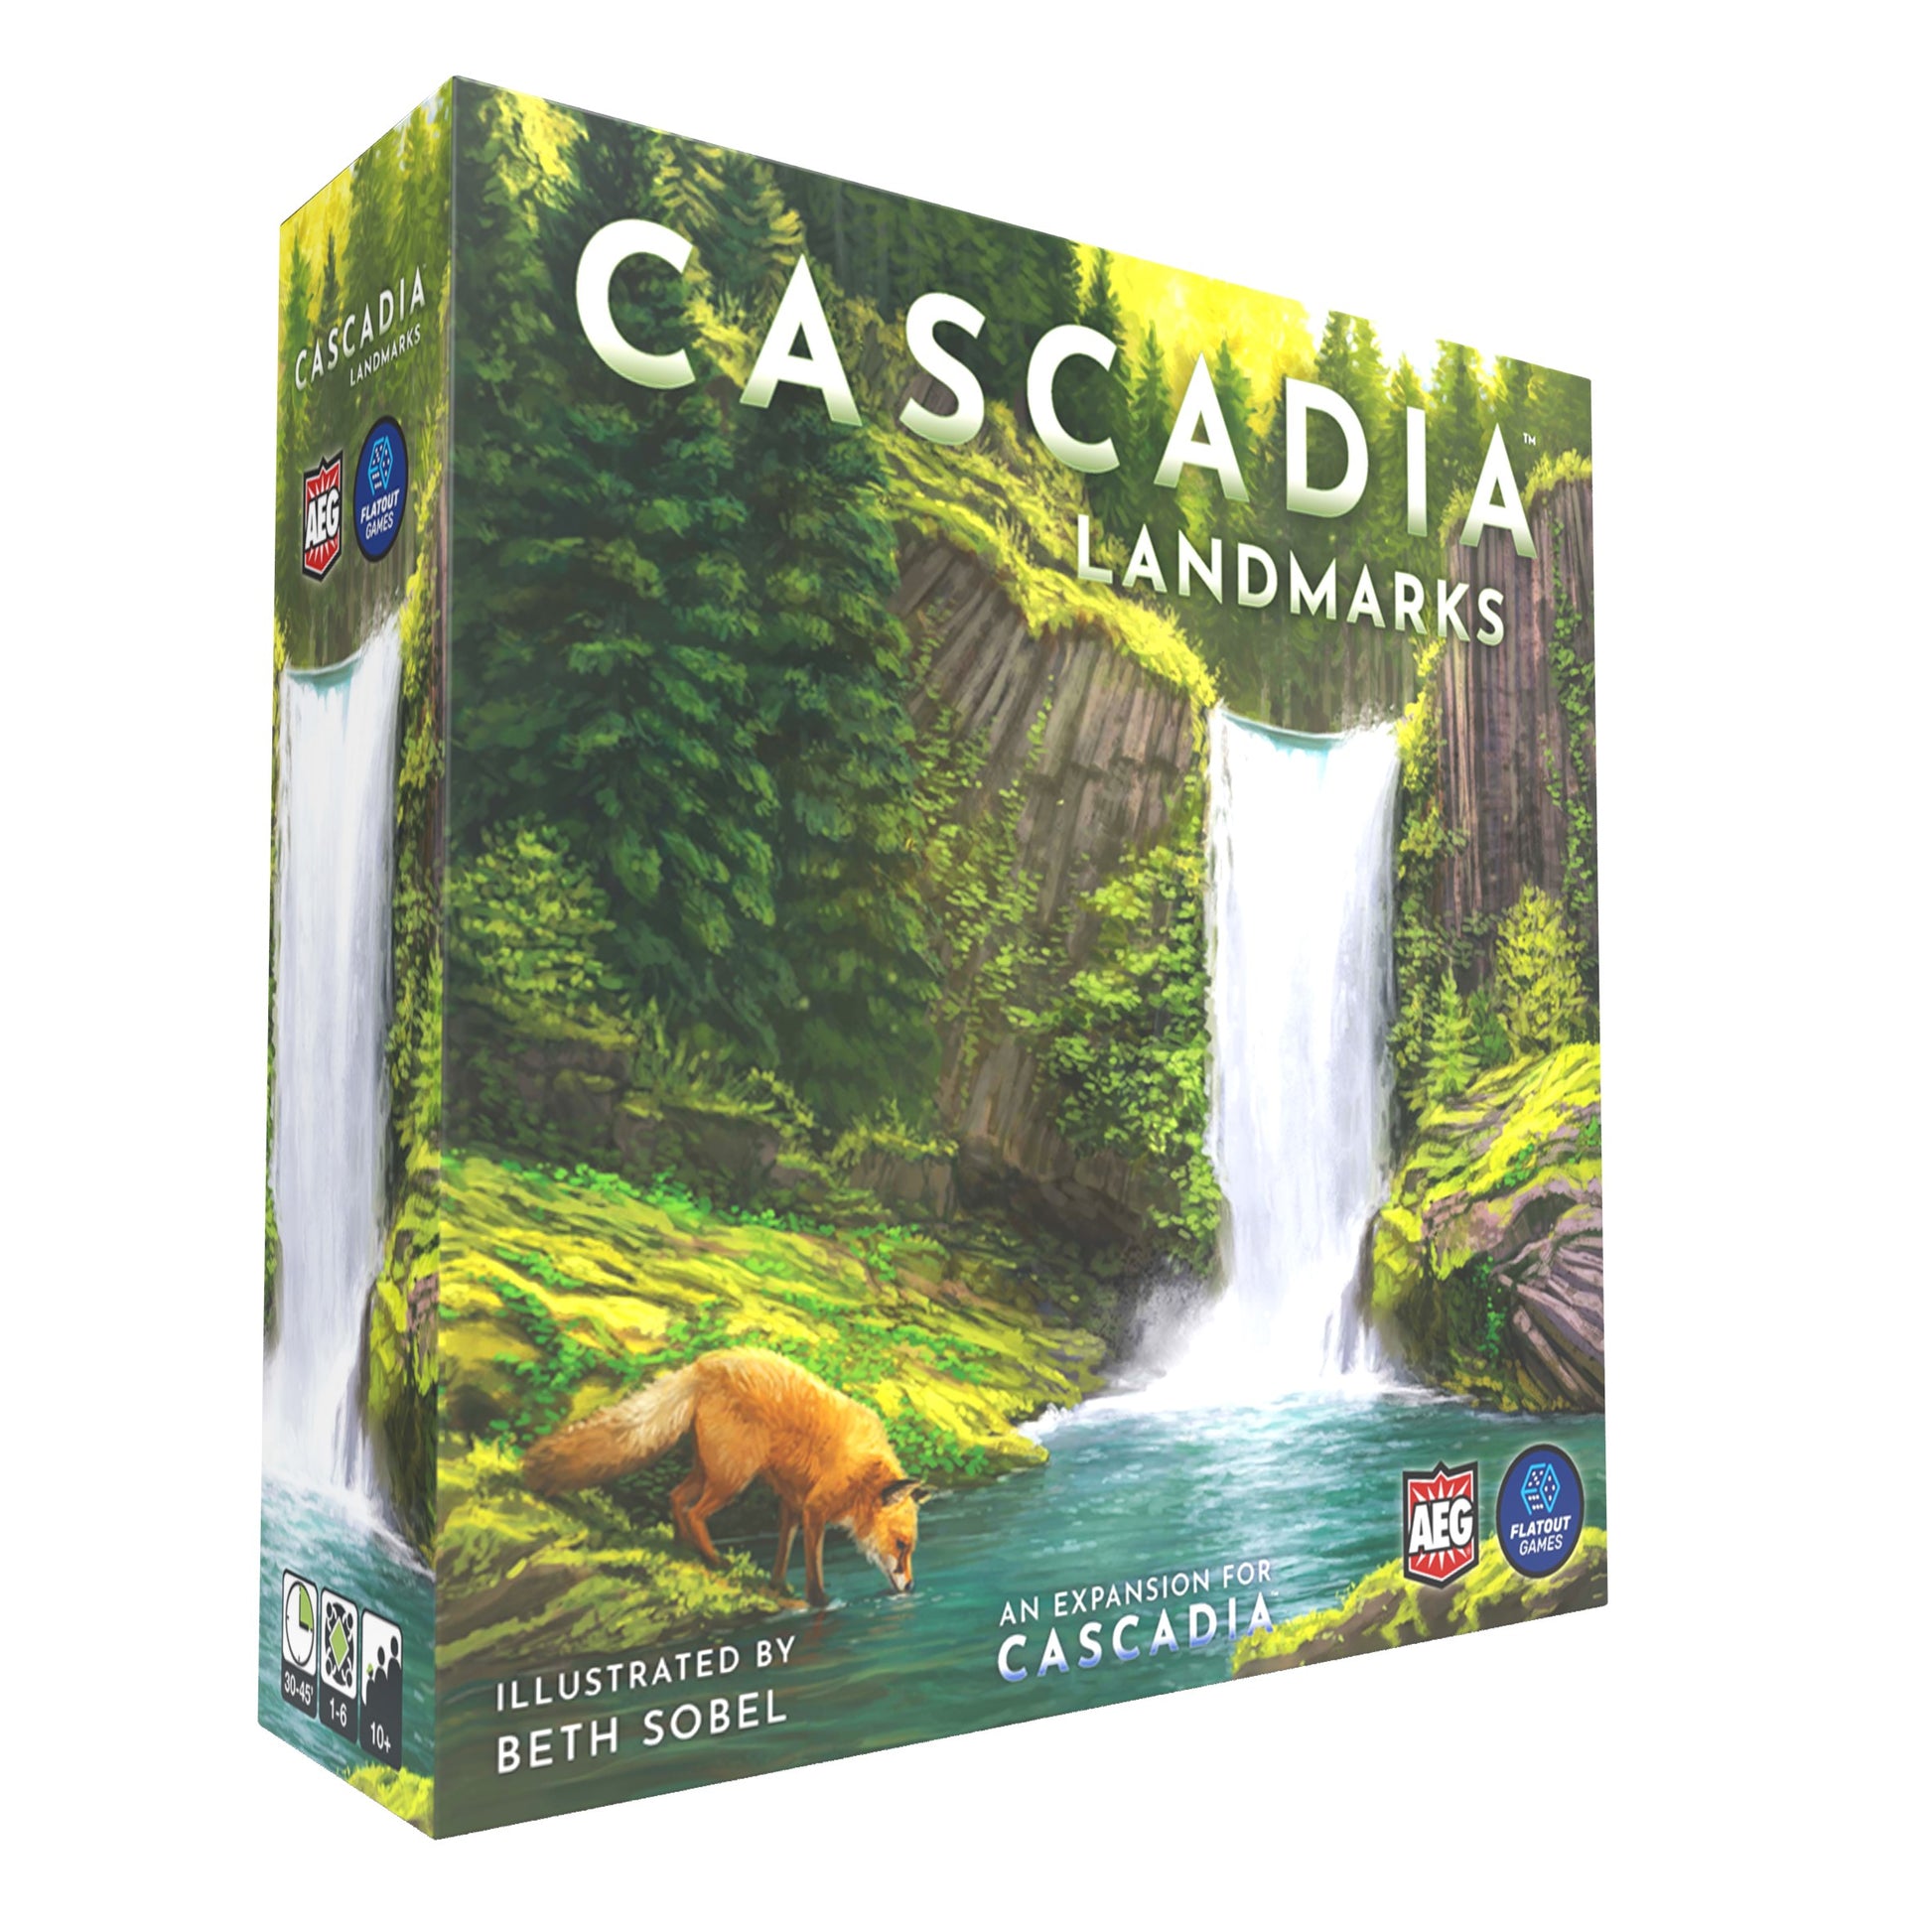 Cascadia - Landmarks